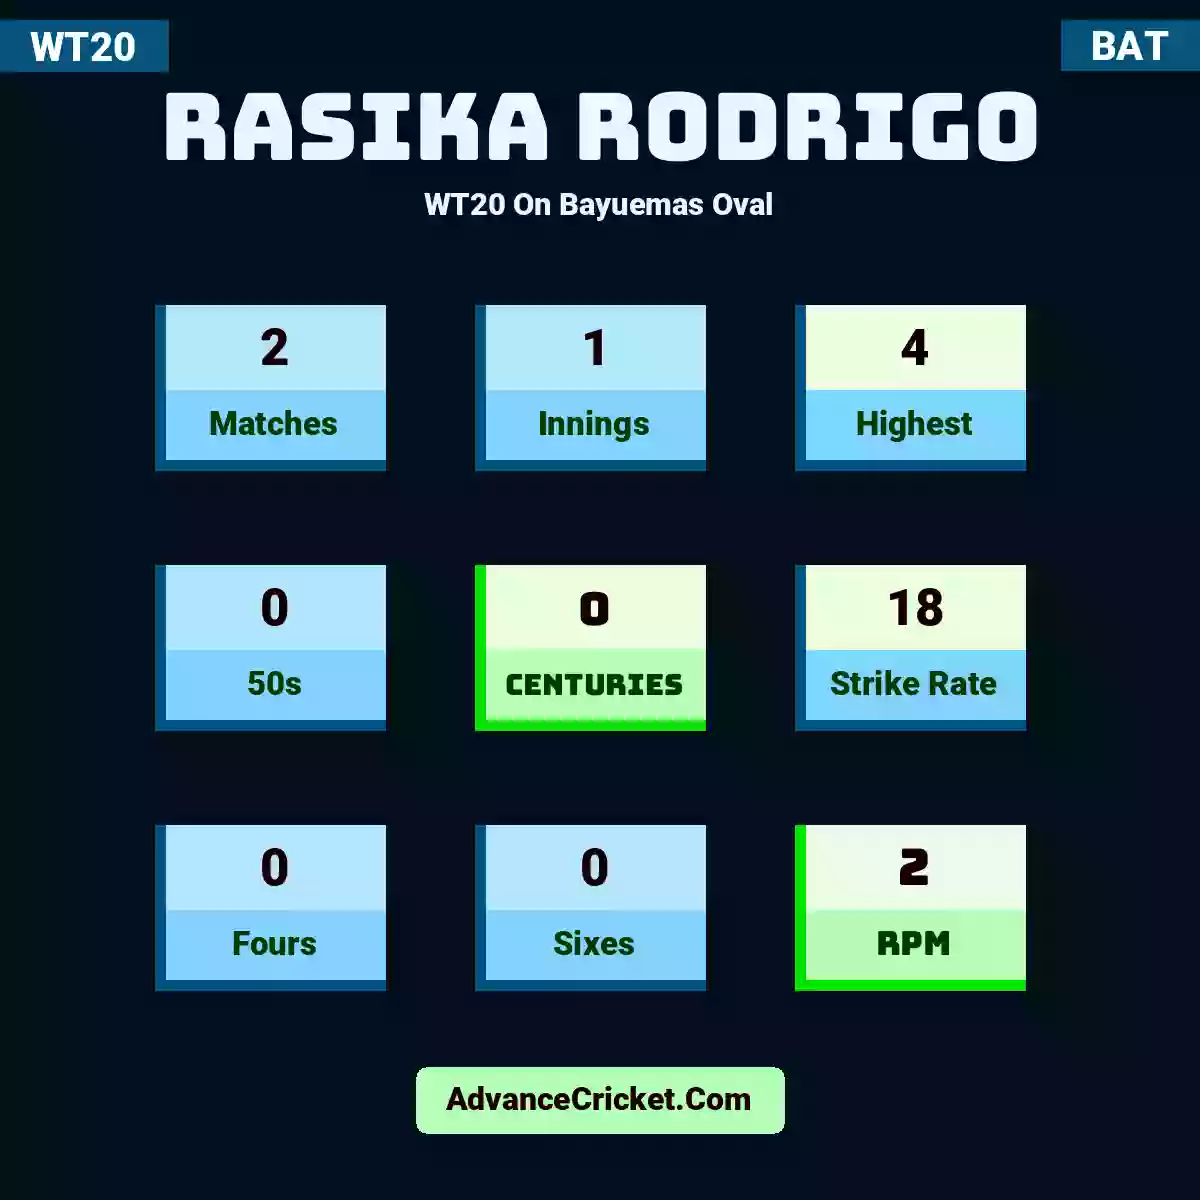 Rasika Rodrigo WT20  On Bayuemas Oval, Rasika Rodrigo played 2 matches, scored 4 runs as highest, 0 half-centuries, and 0 centuries, with a strike rate of 18. R.Rodrigo hit 0 fours and 0 sixes, with an RPM of 2.